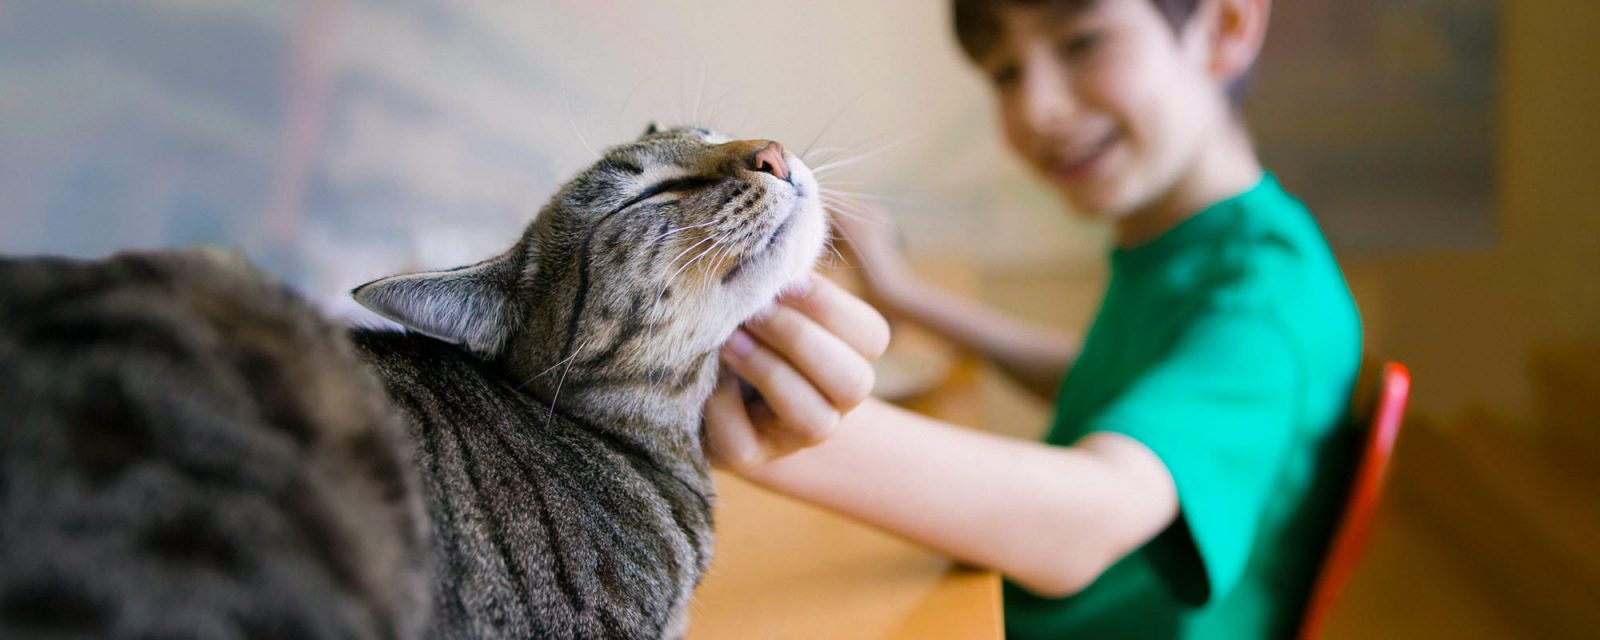 Boy scratching chin of grey tabby cat